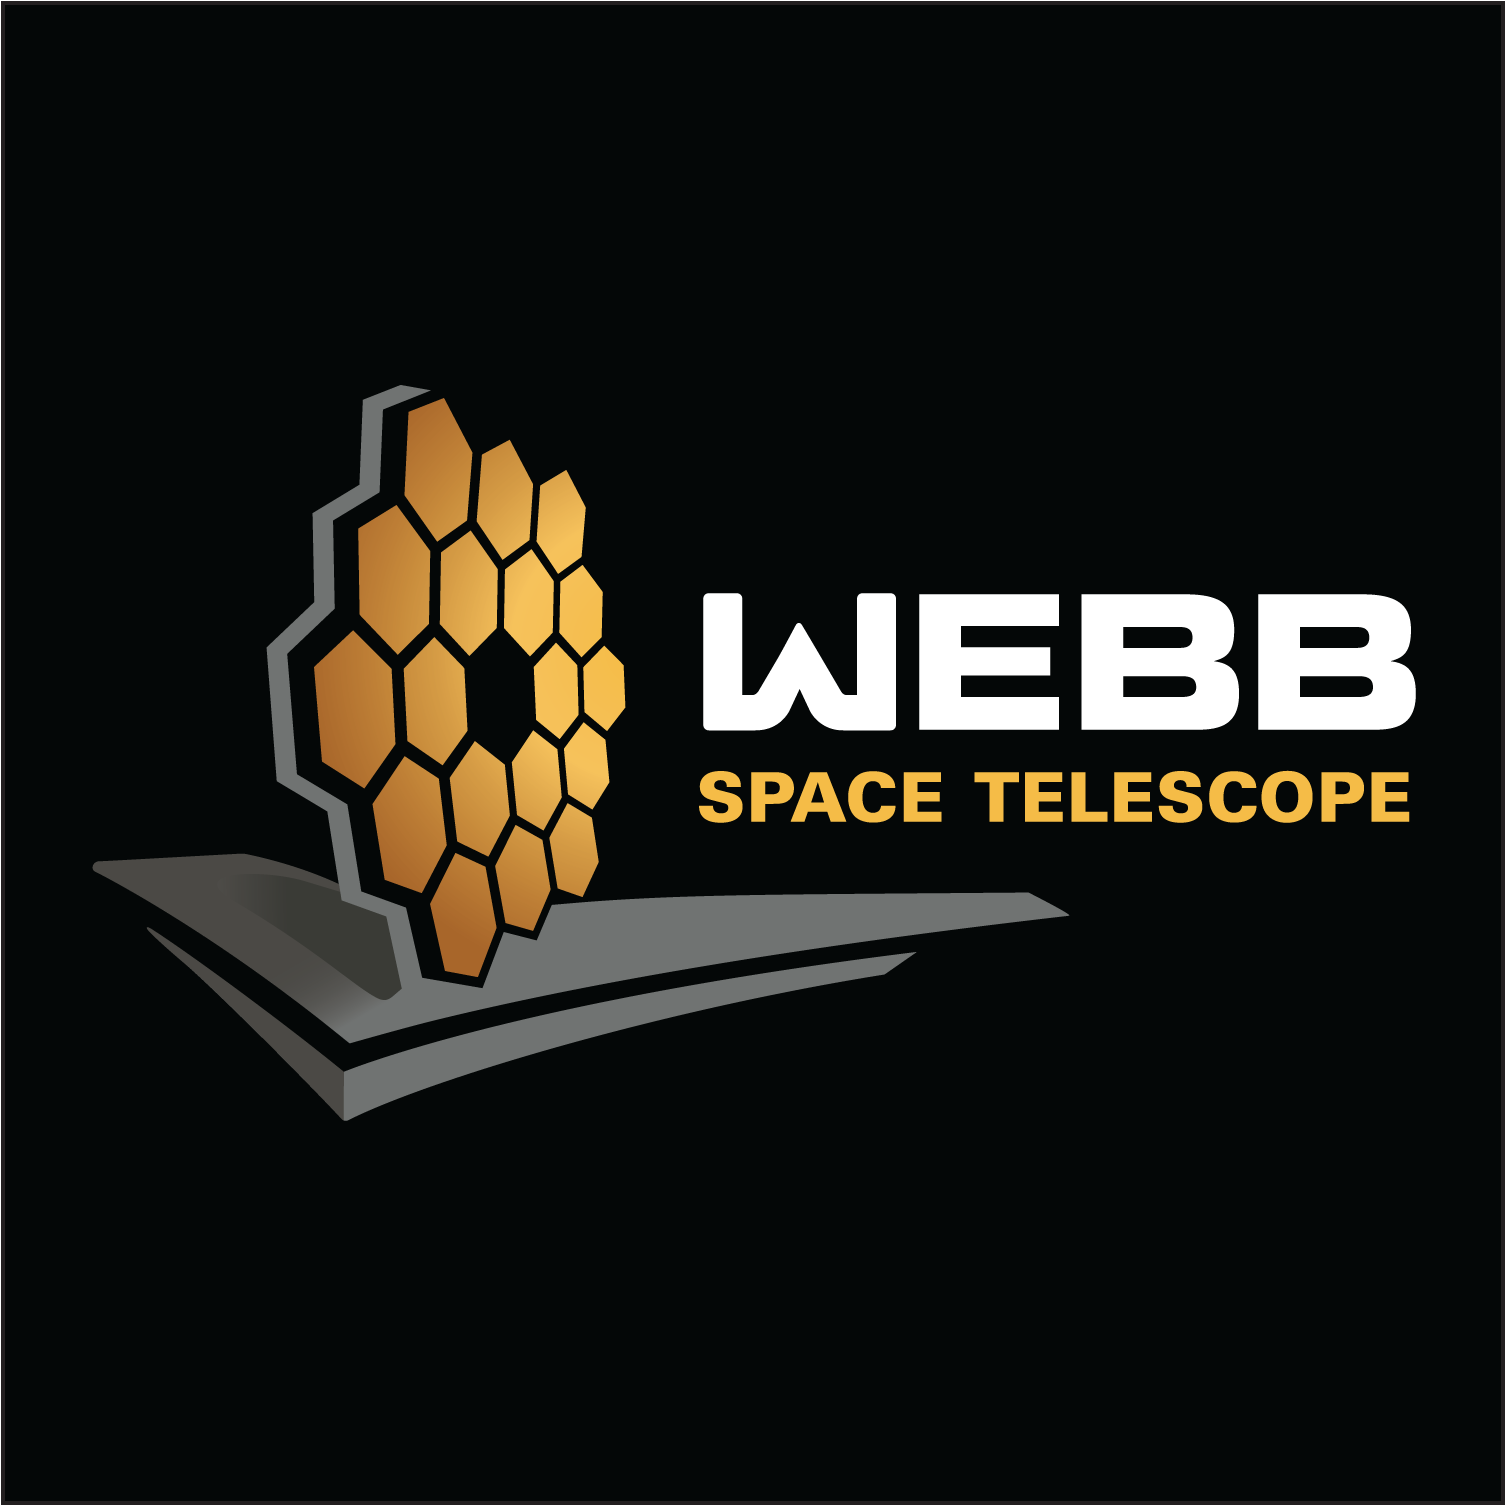 James Webb Telescope Logo in Full Color/Black